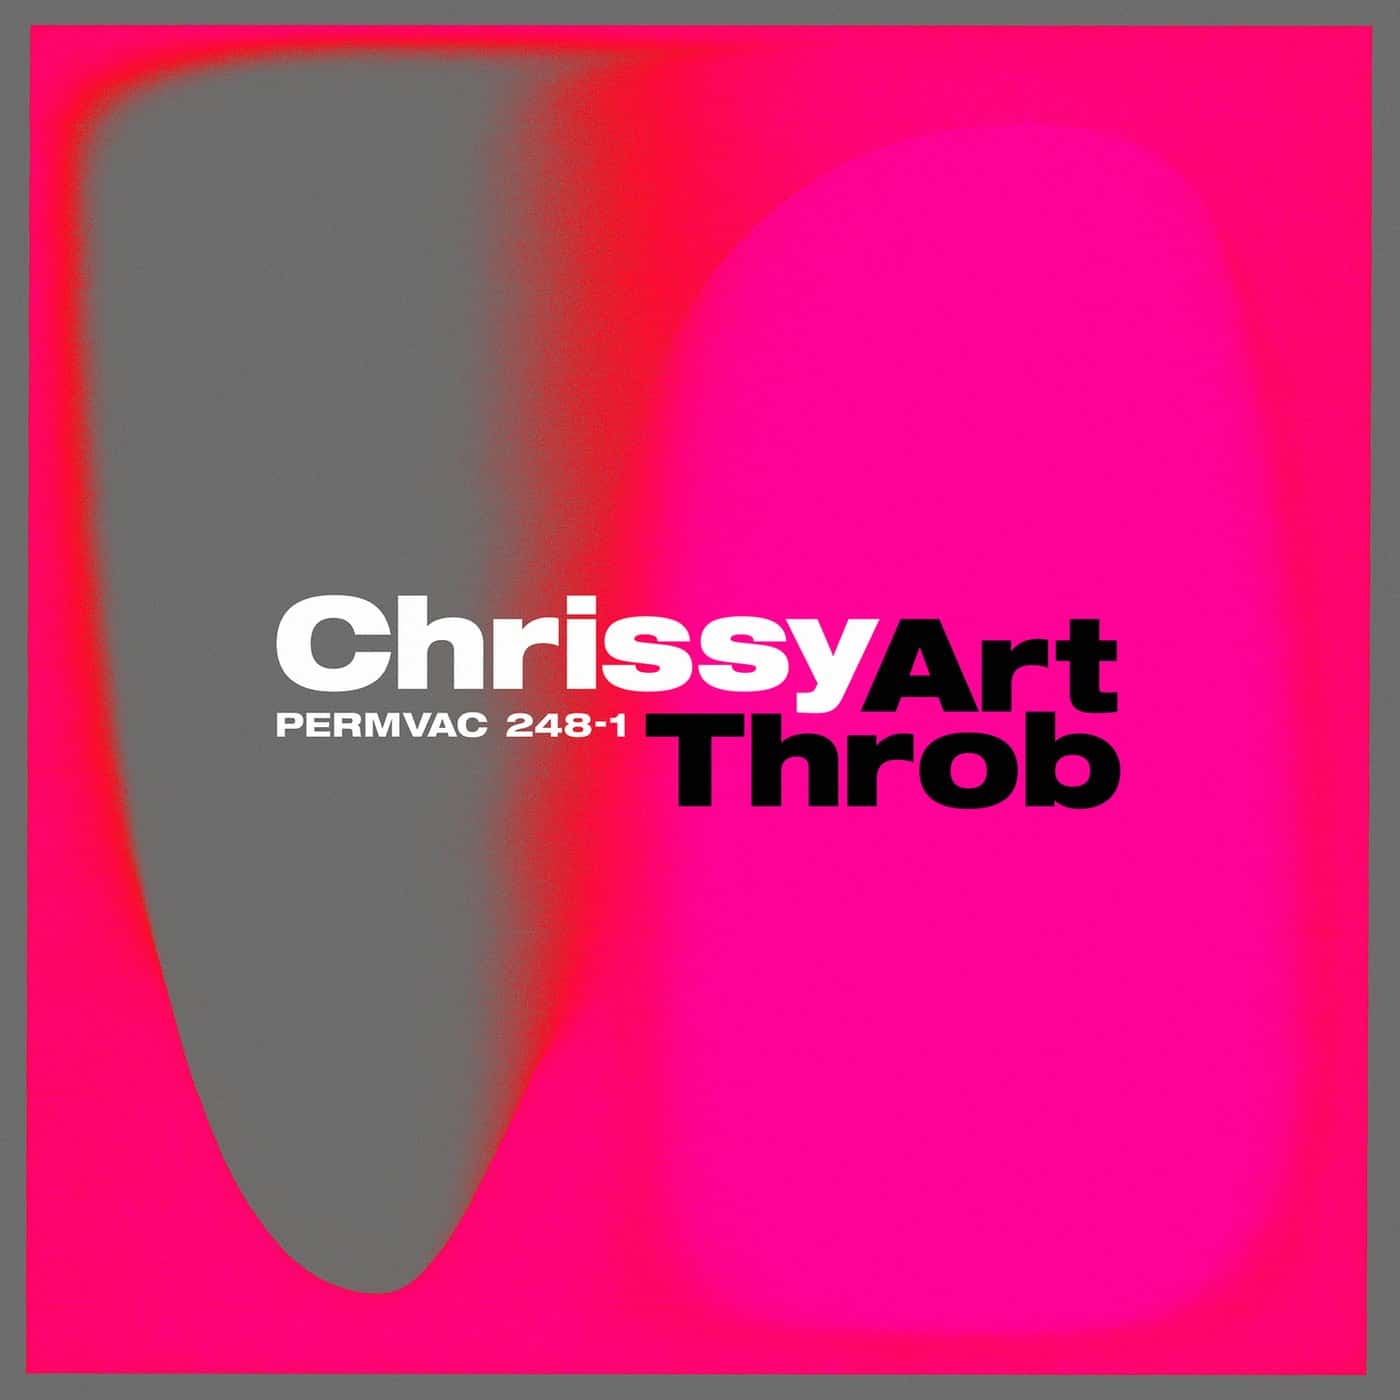 Download Chrissy - Art Throb EP on Electrobuzz